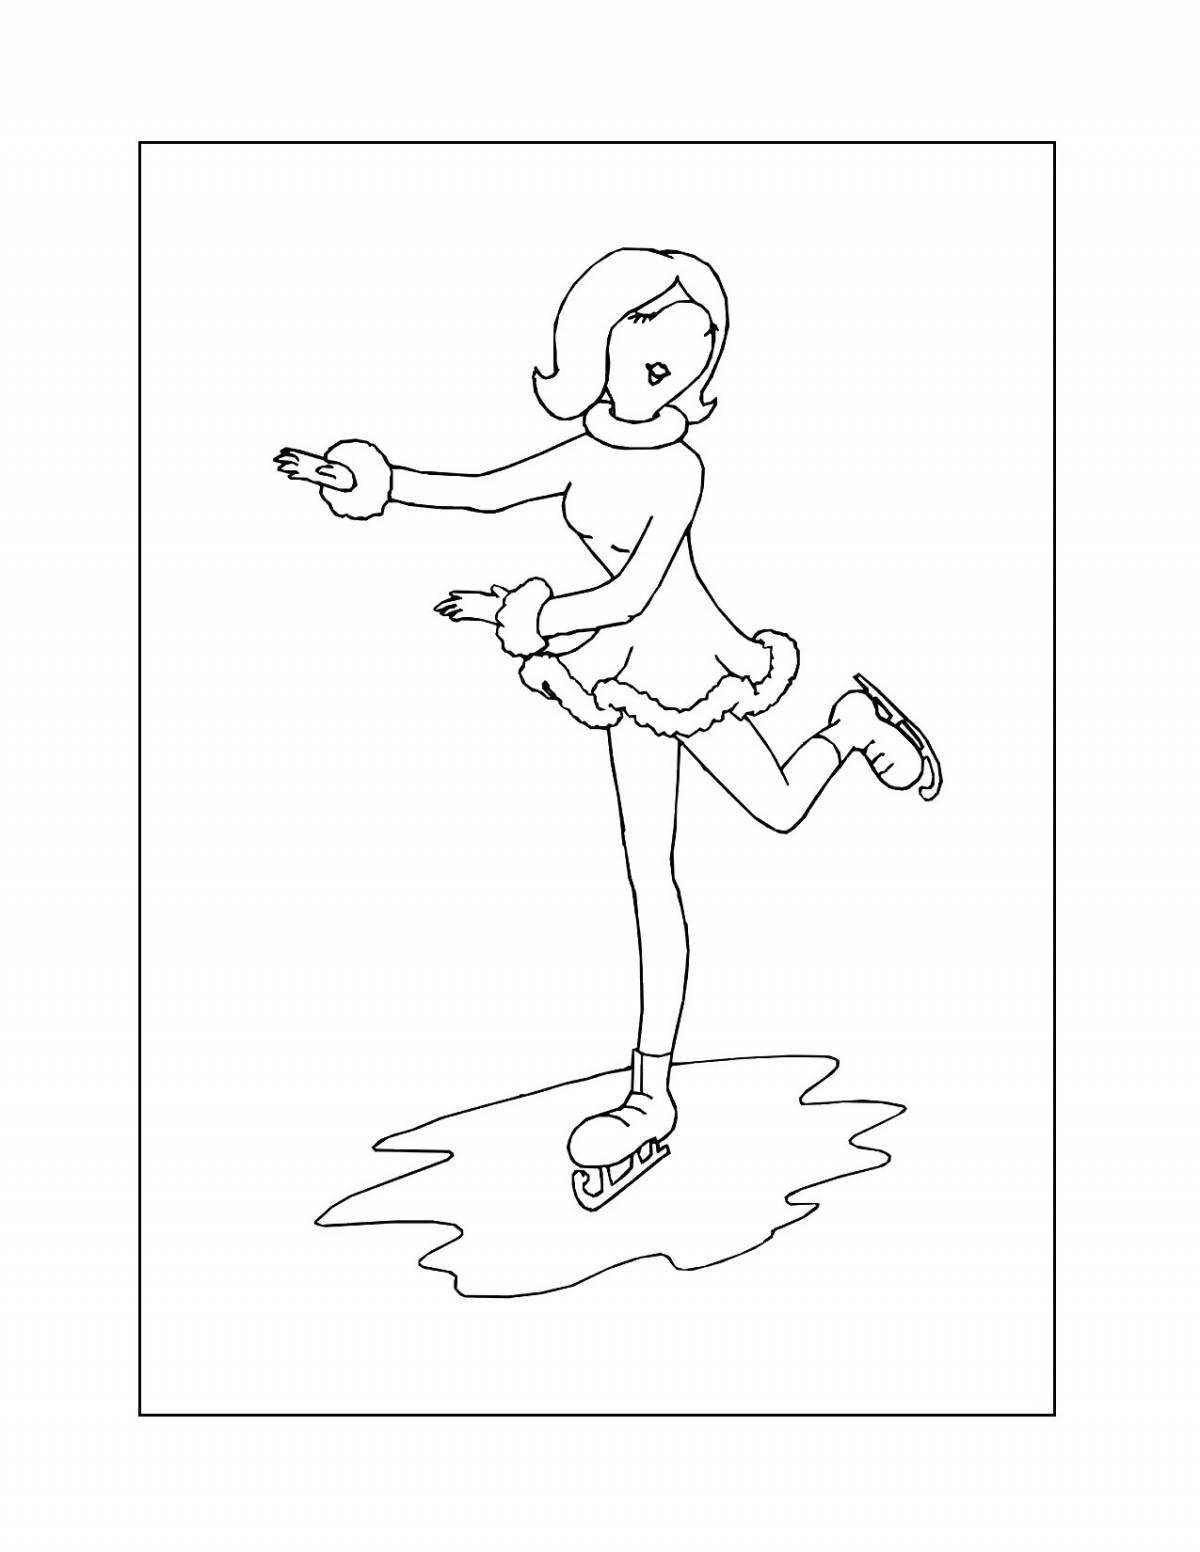 A shiny girl on skates